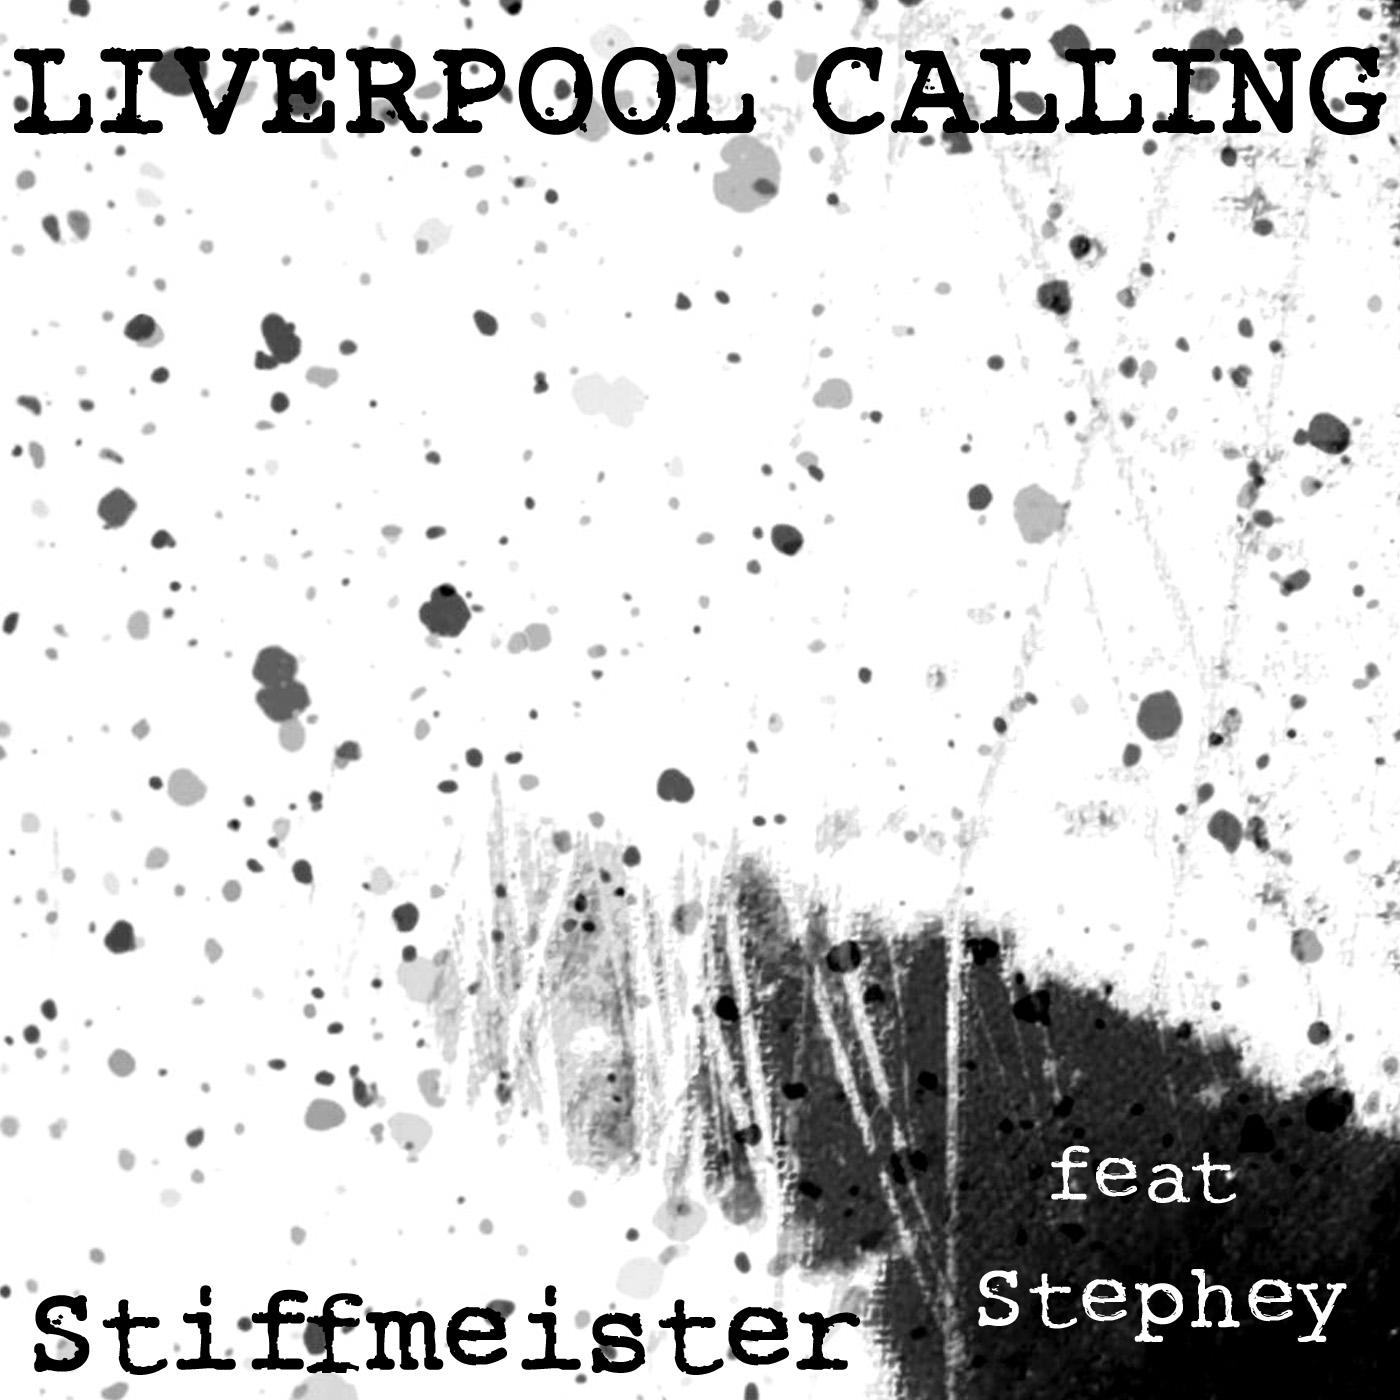 Liverpool calling